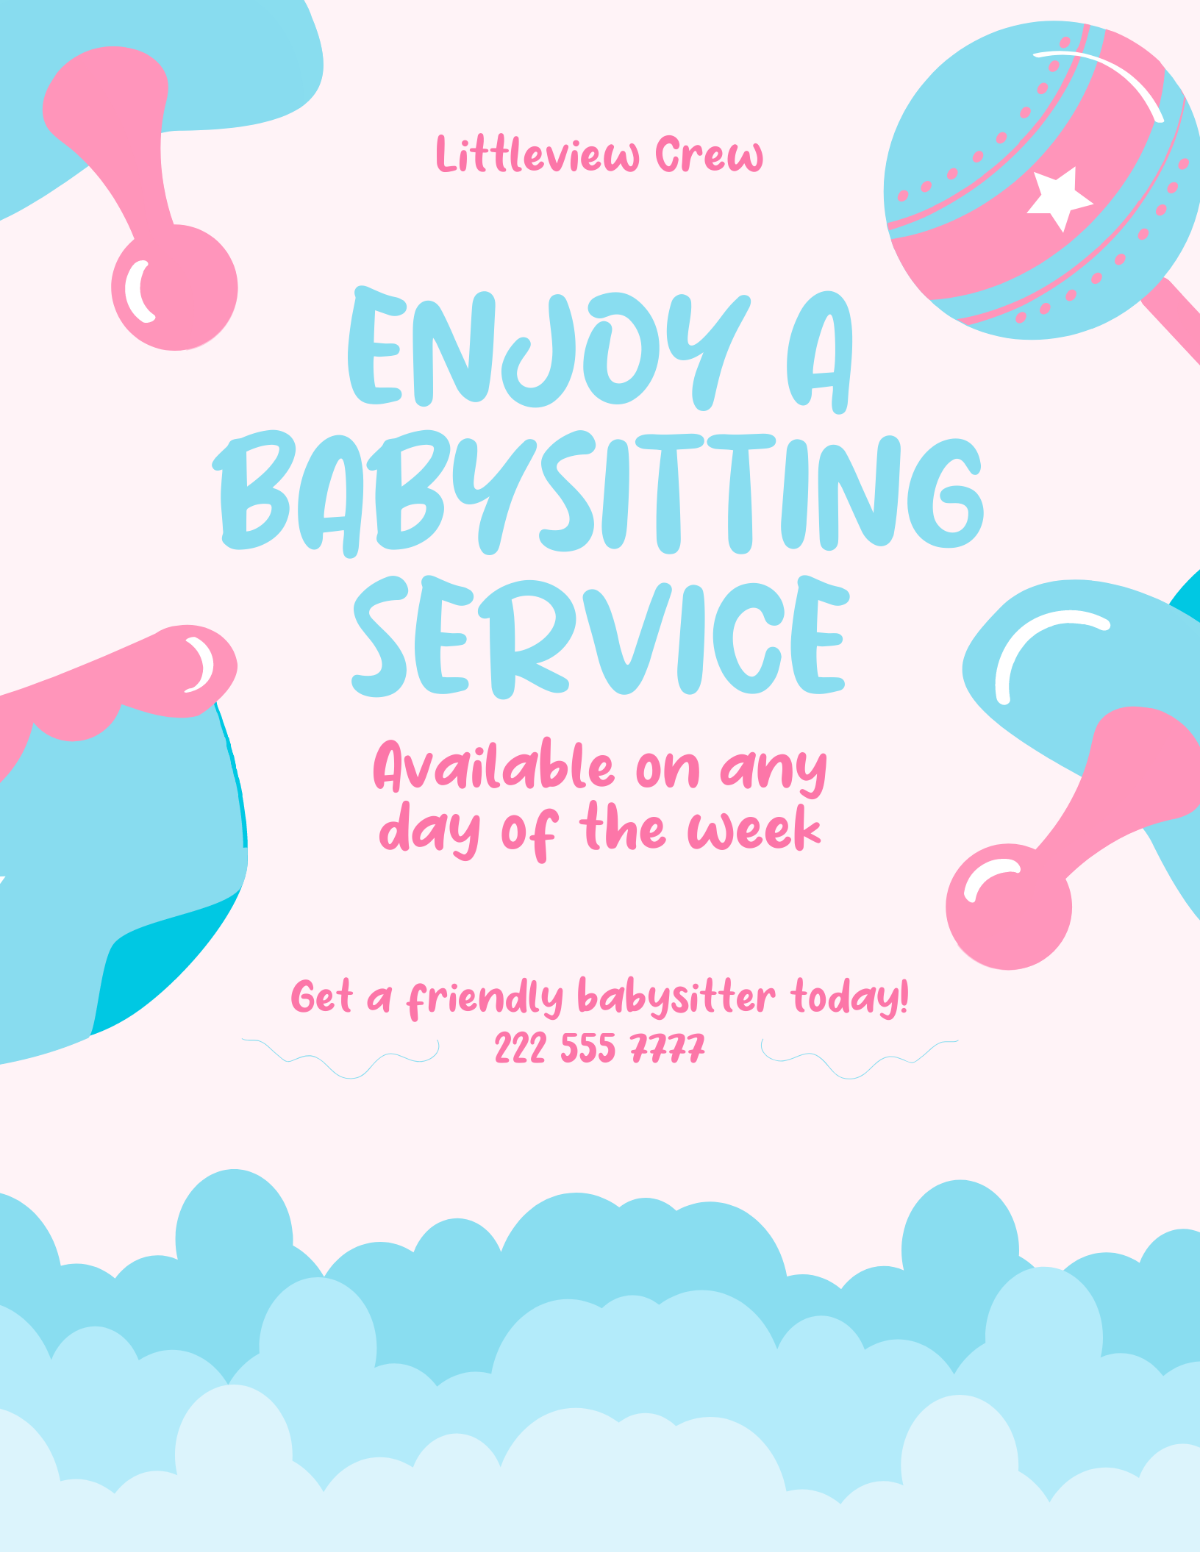 Free Babysitting Service Flyer Template